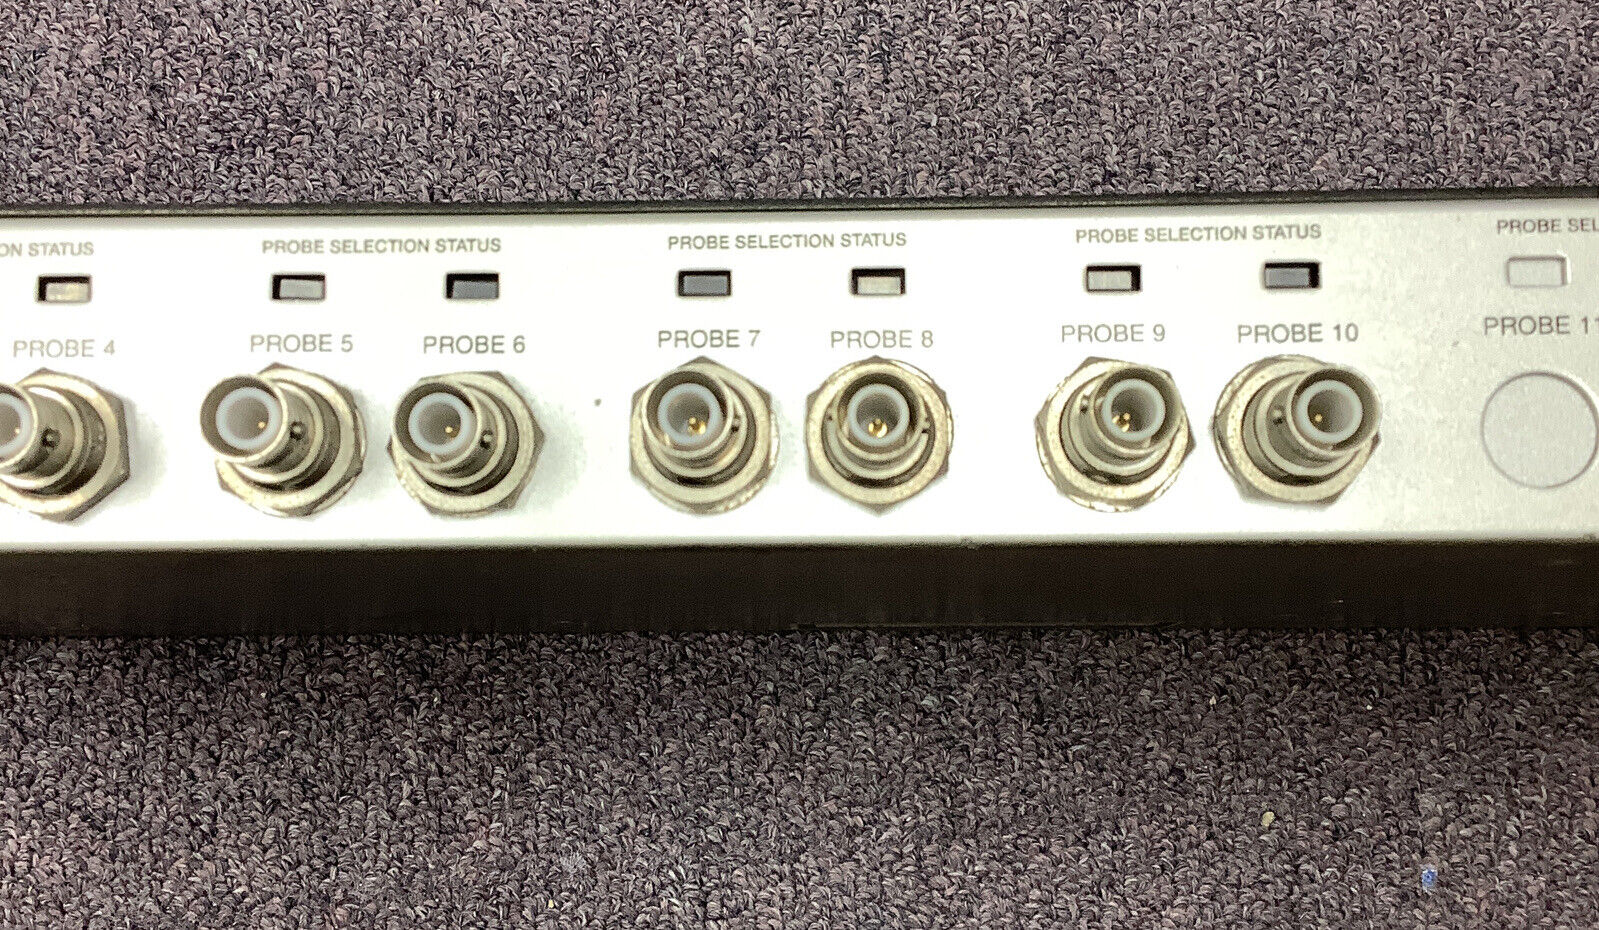 Dukane IQ MPC1610 10 Probe Switch (OV105)